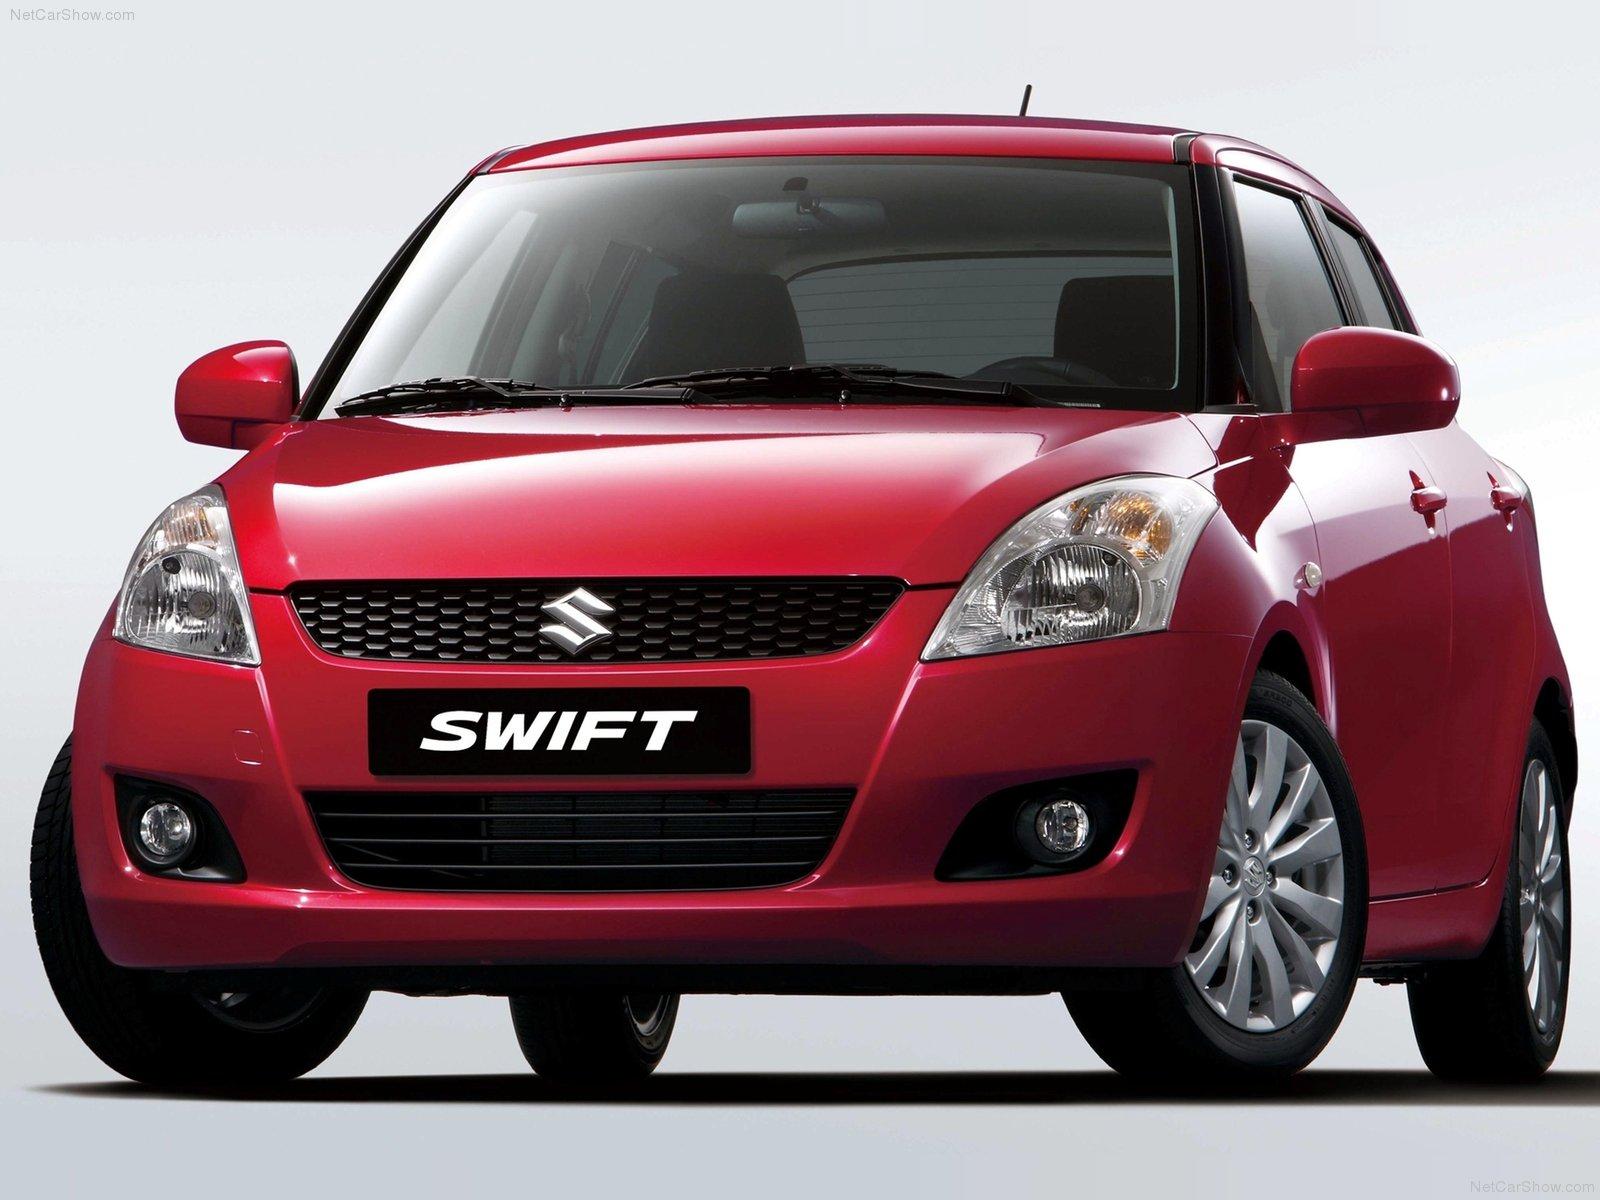 New Maruti Suzuki Swift Wallpaper And Image Vivid Car